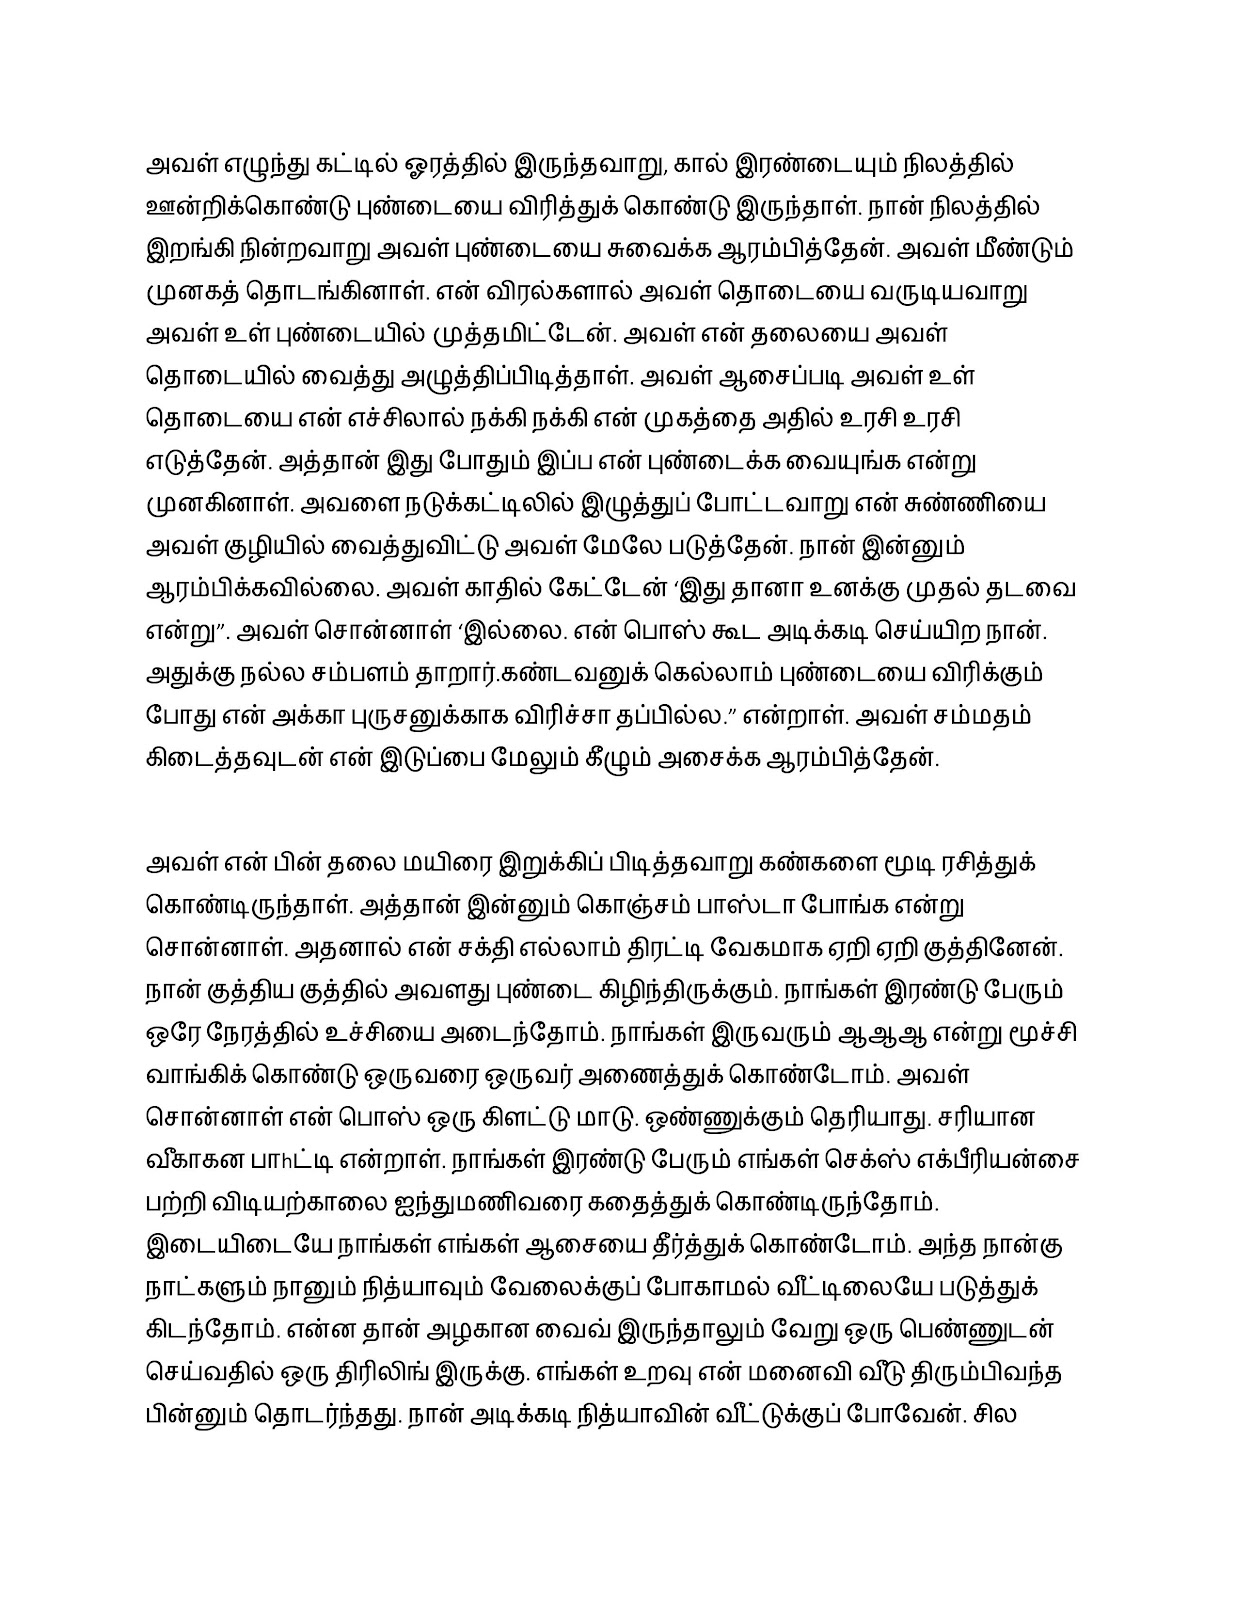 tamil pdf kamakathaikal free